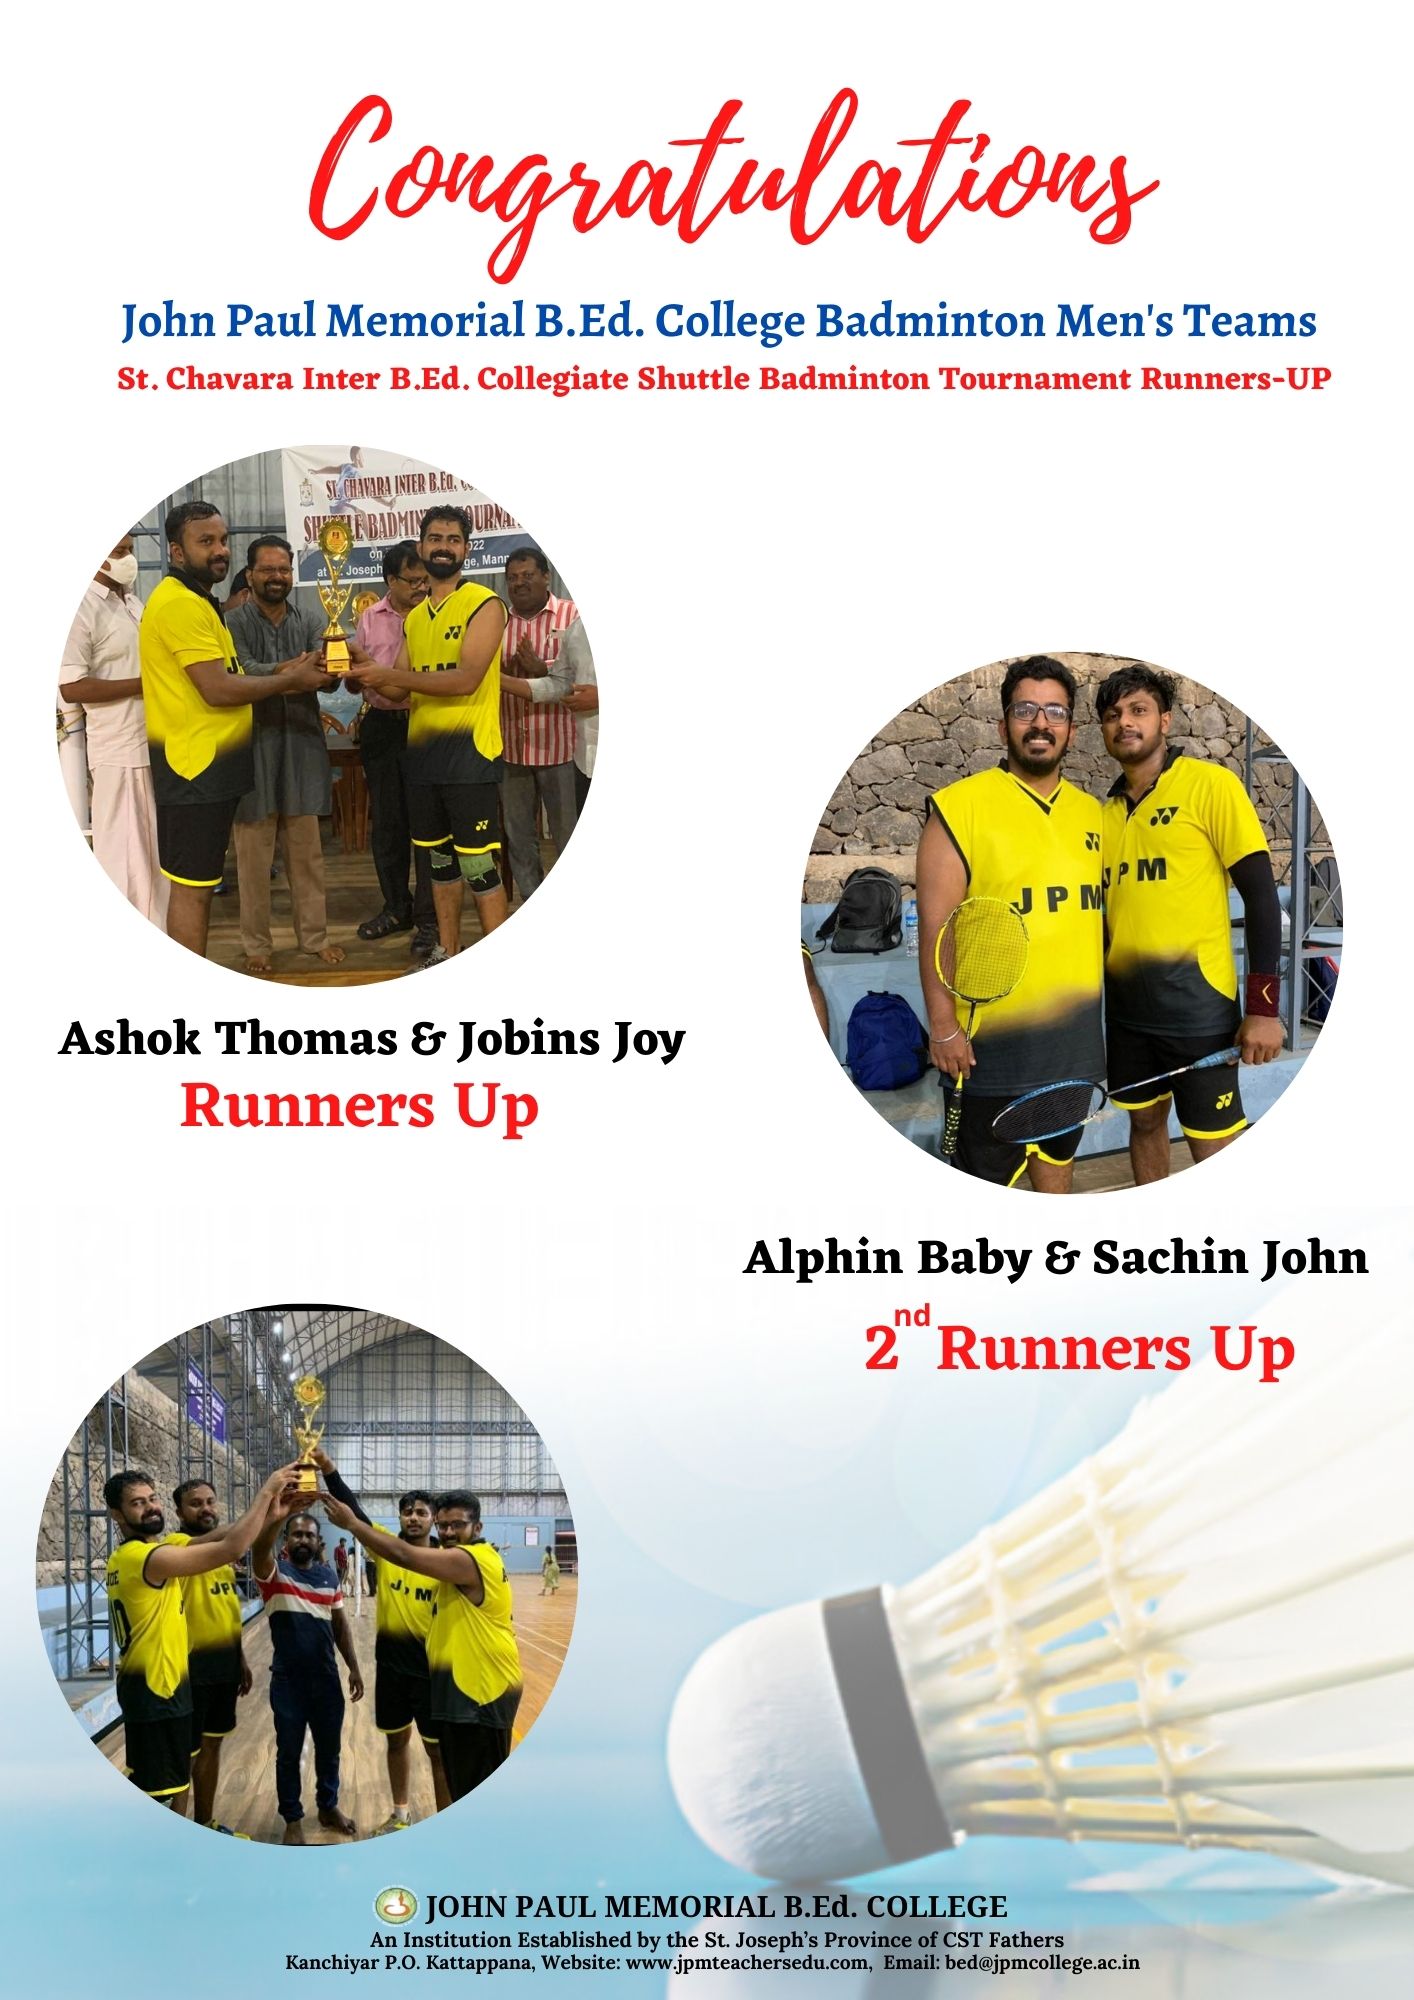 St. Chavara Inter B.Ed. Collegiate Shuttle Badminton Tournament Runners-UP